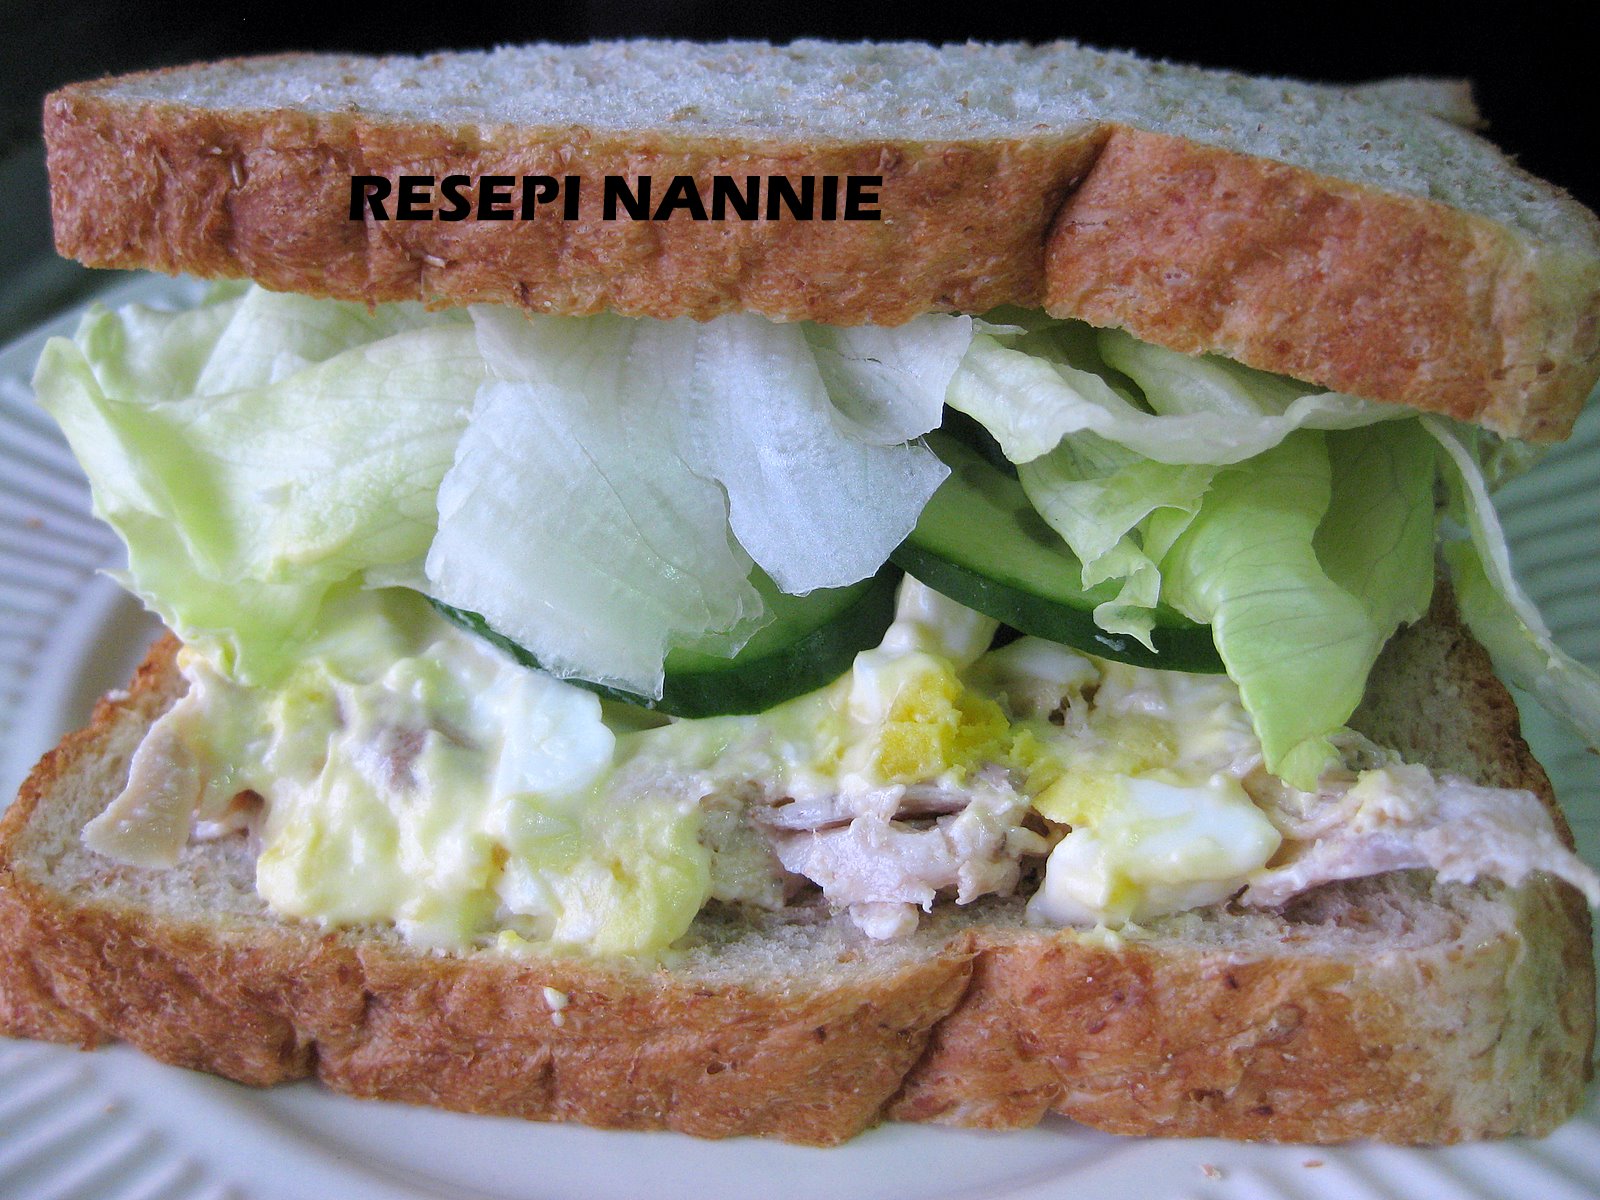 RESEPI NANNIE: CHICKEN & EGG MAYO SANDWICH